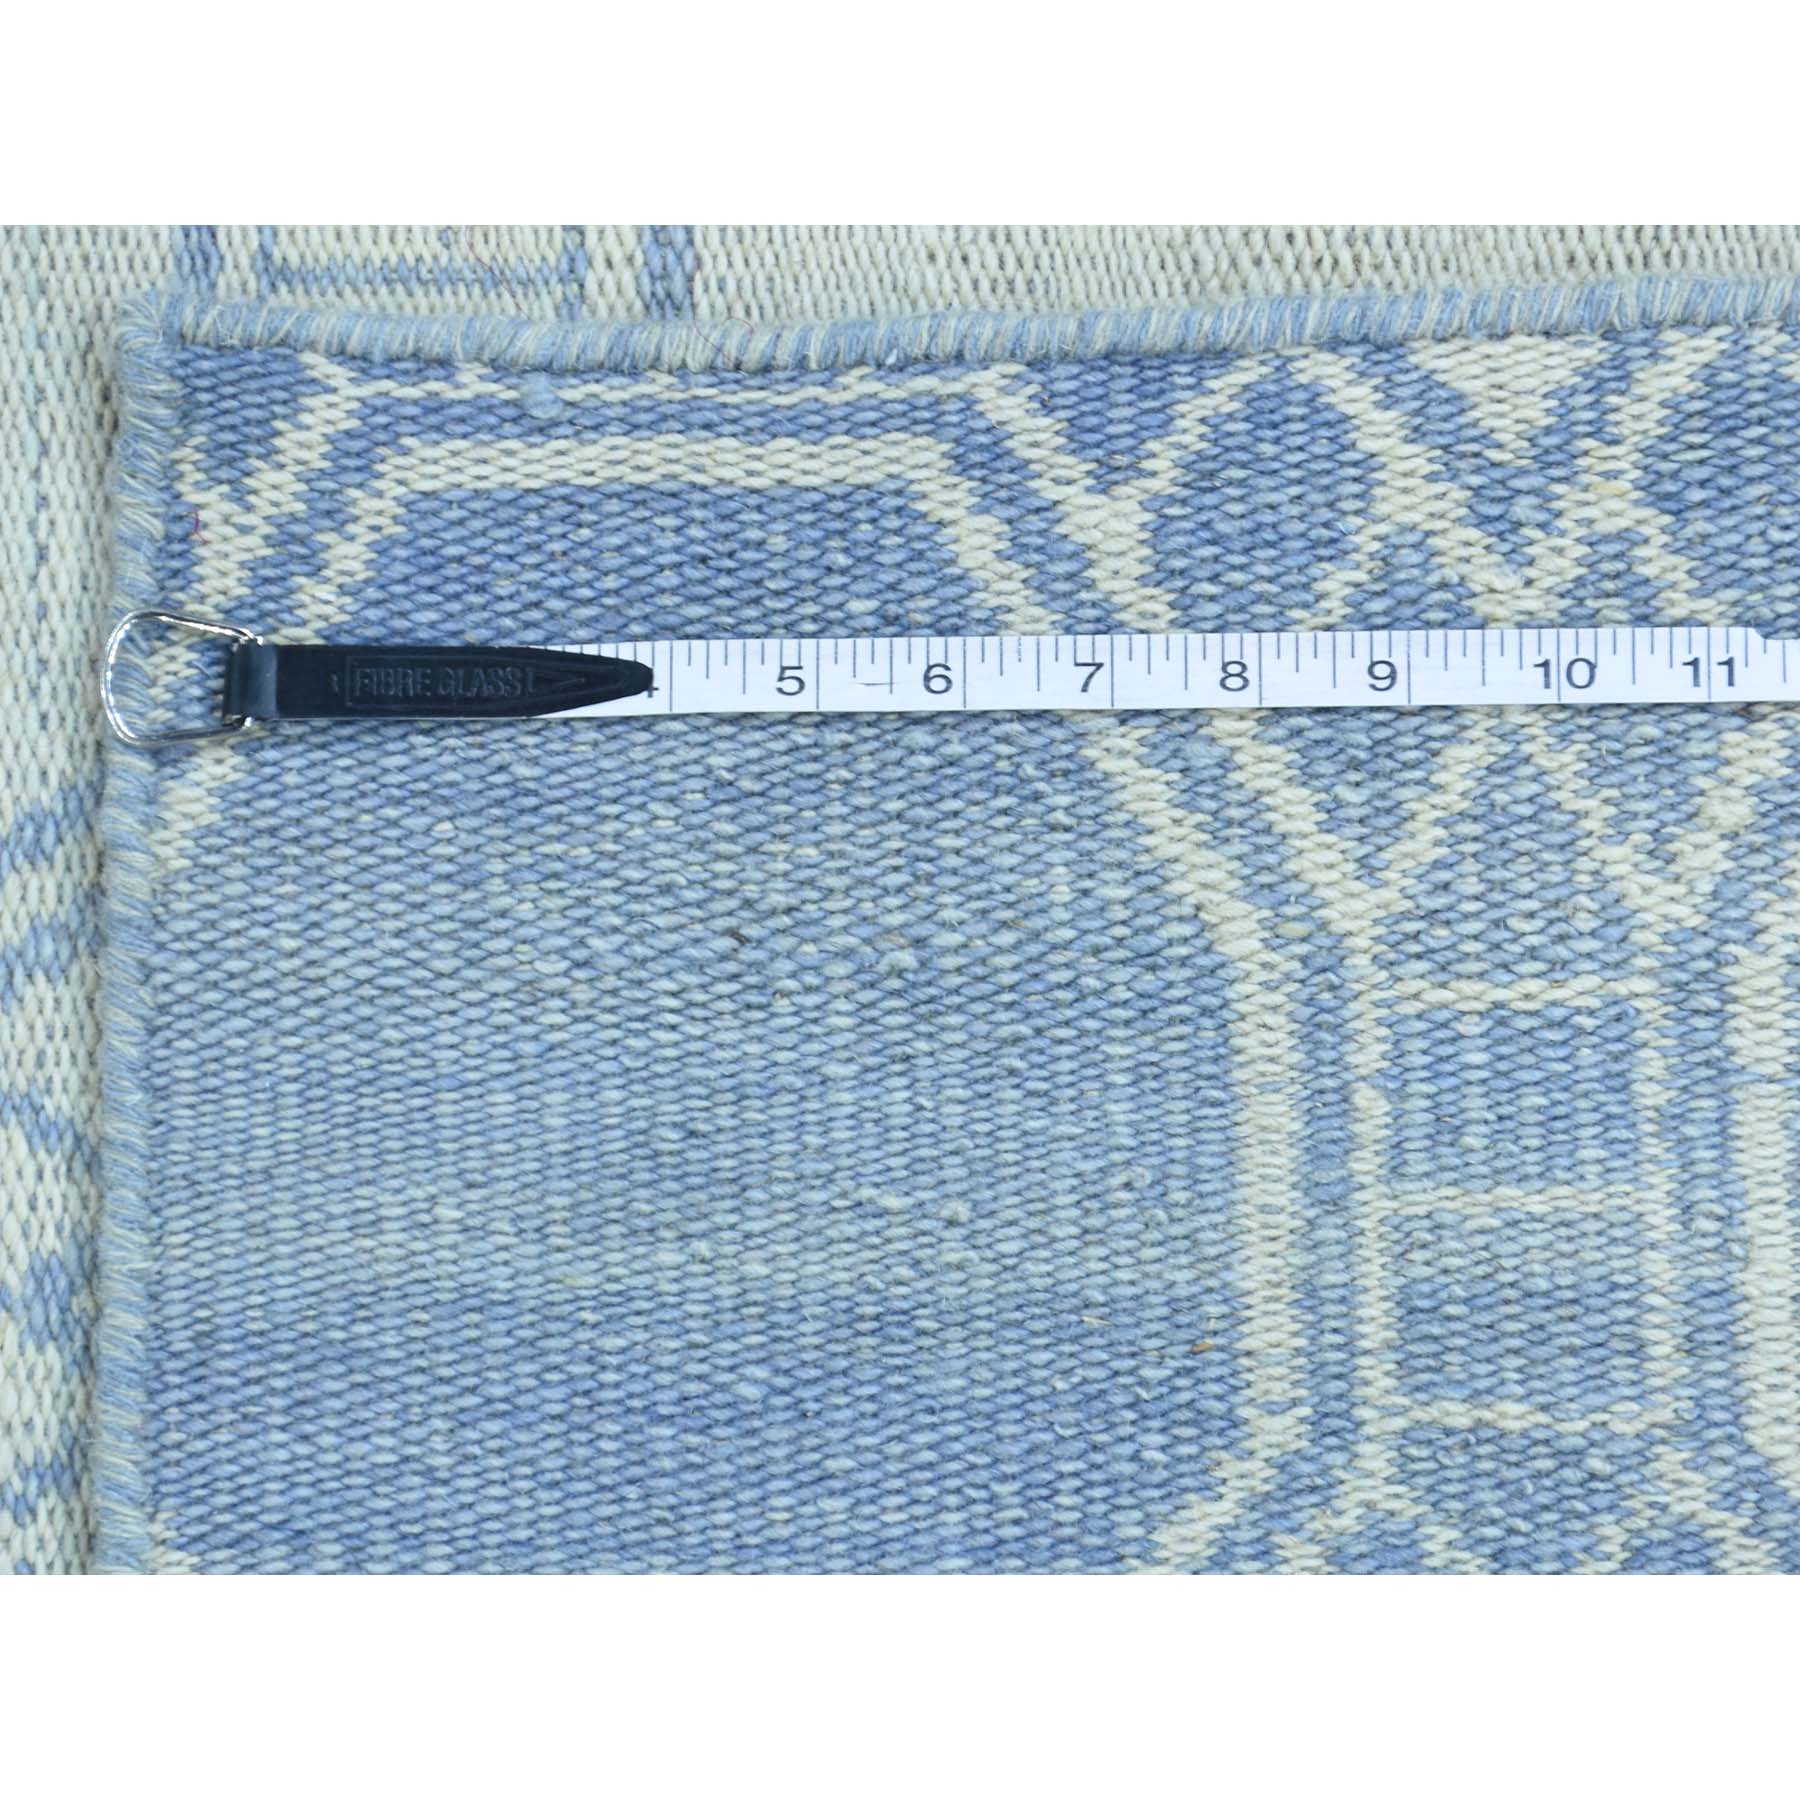 2-6 x10- Reversible Hand-Woven Flat Weave Durie Kilim Runner Rug 